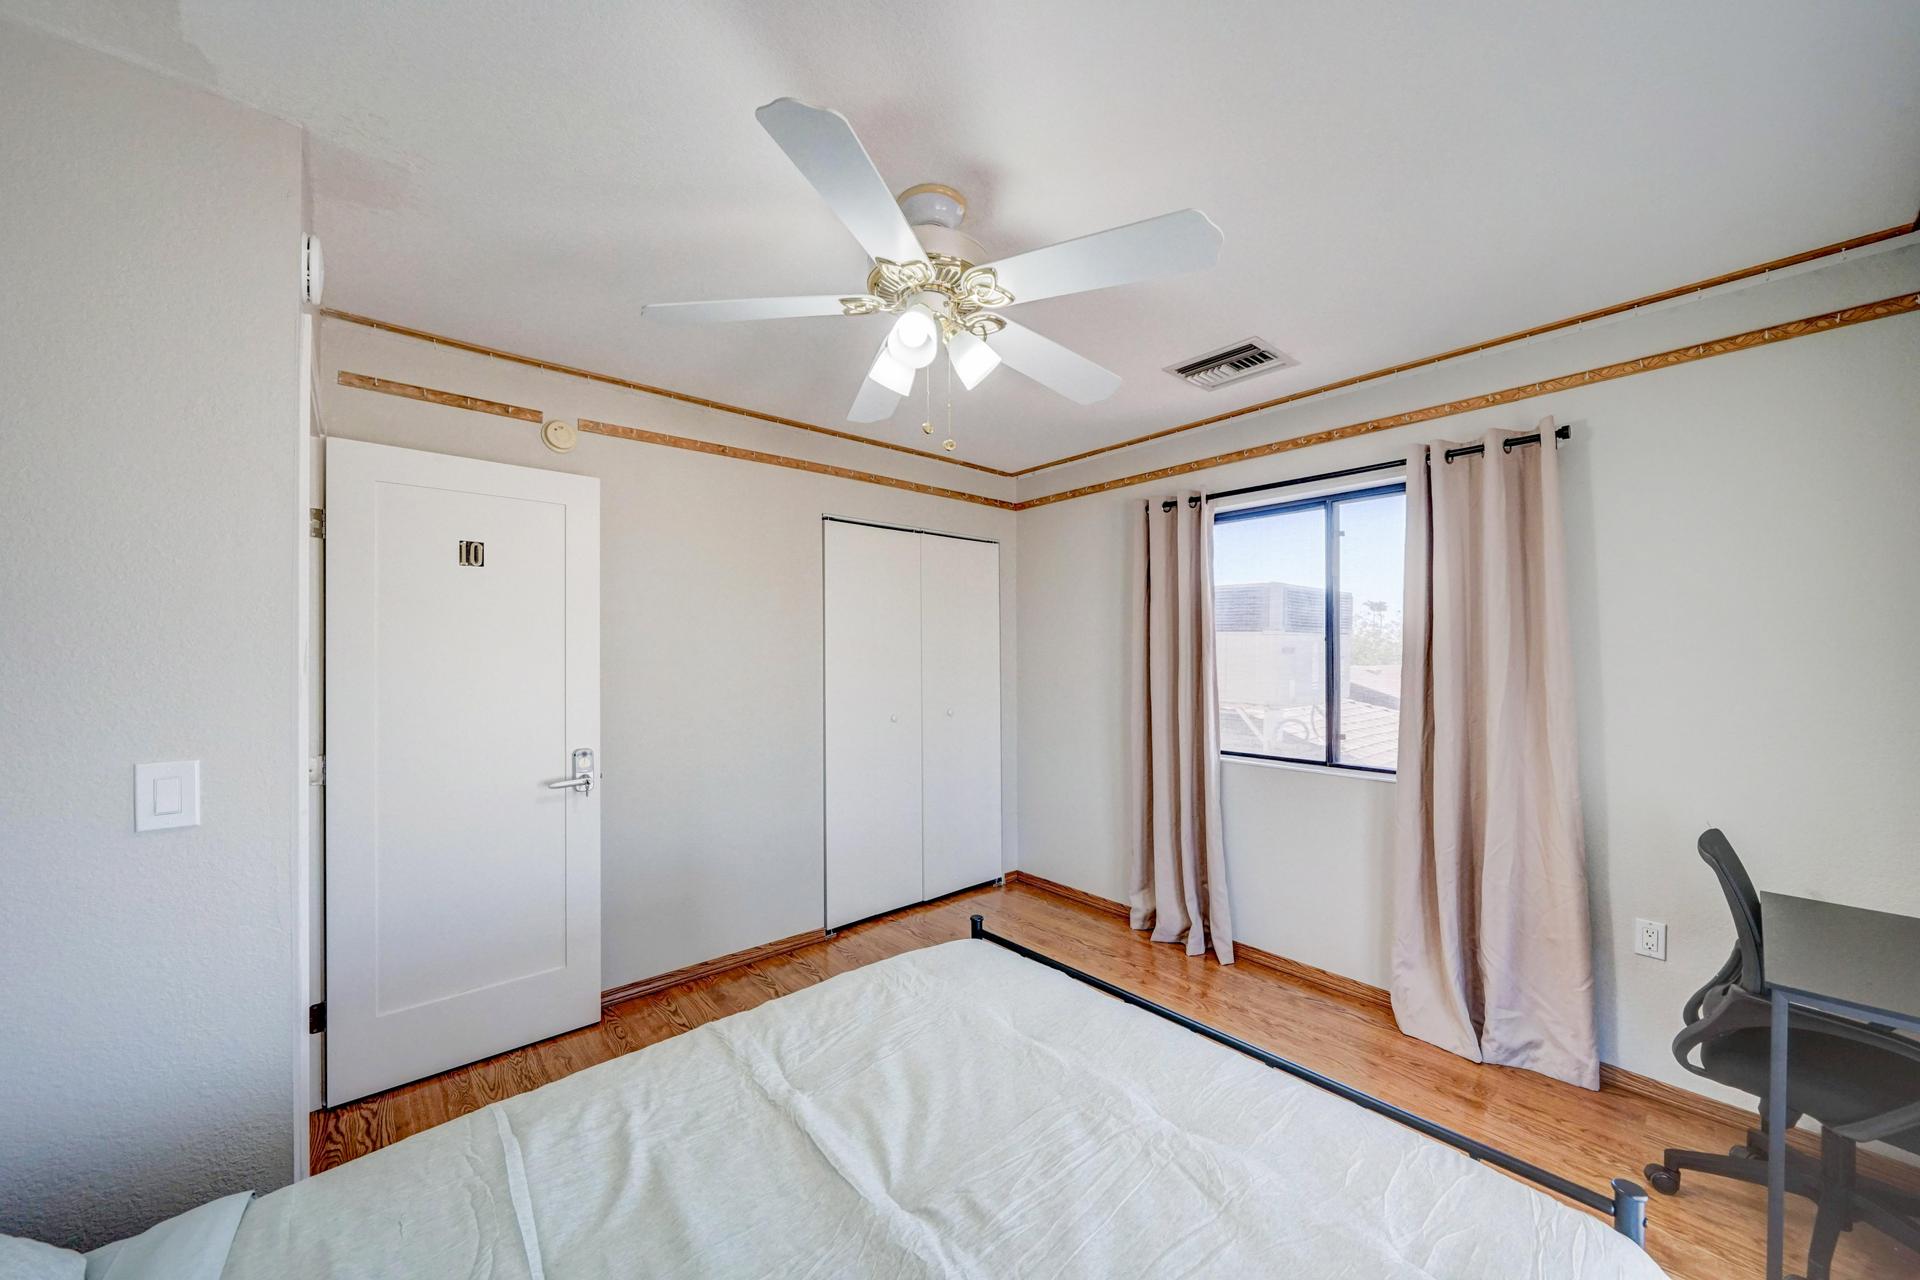 bedroom, detected:ceiling fan, window blind